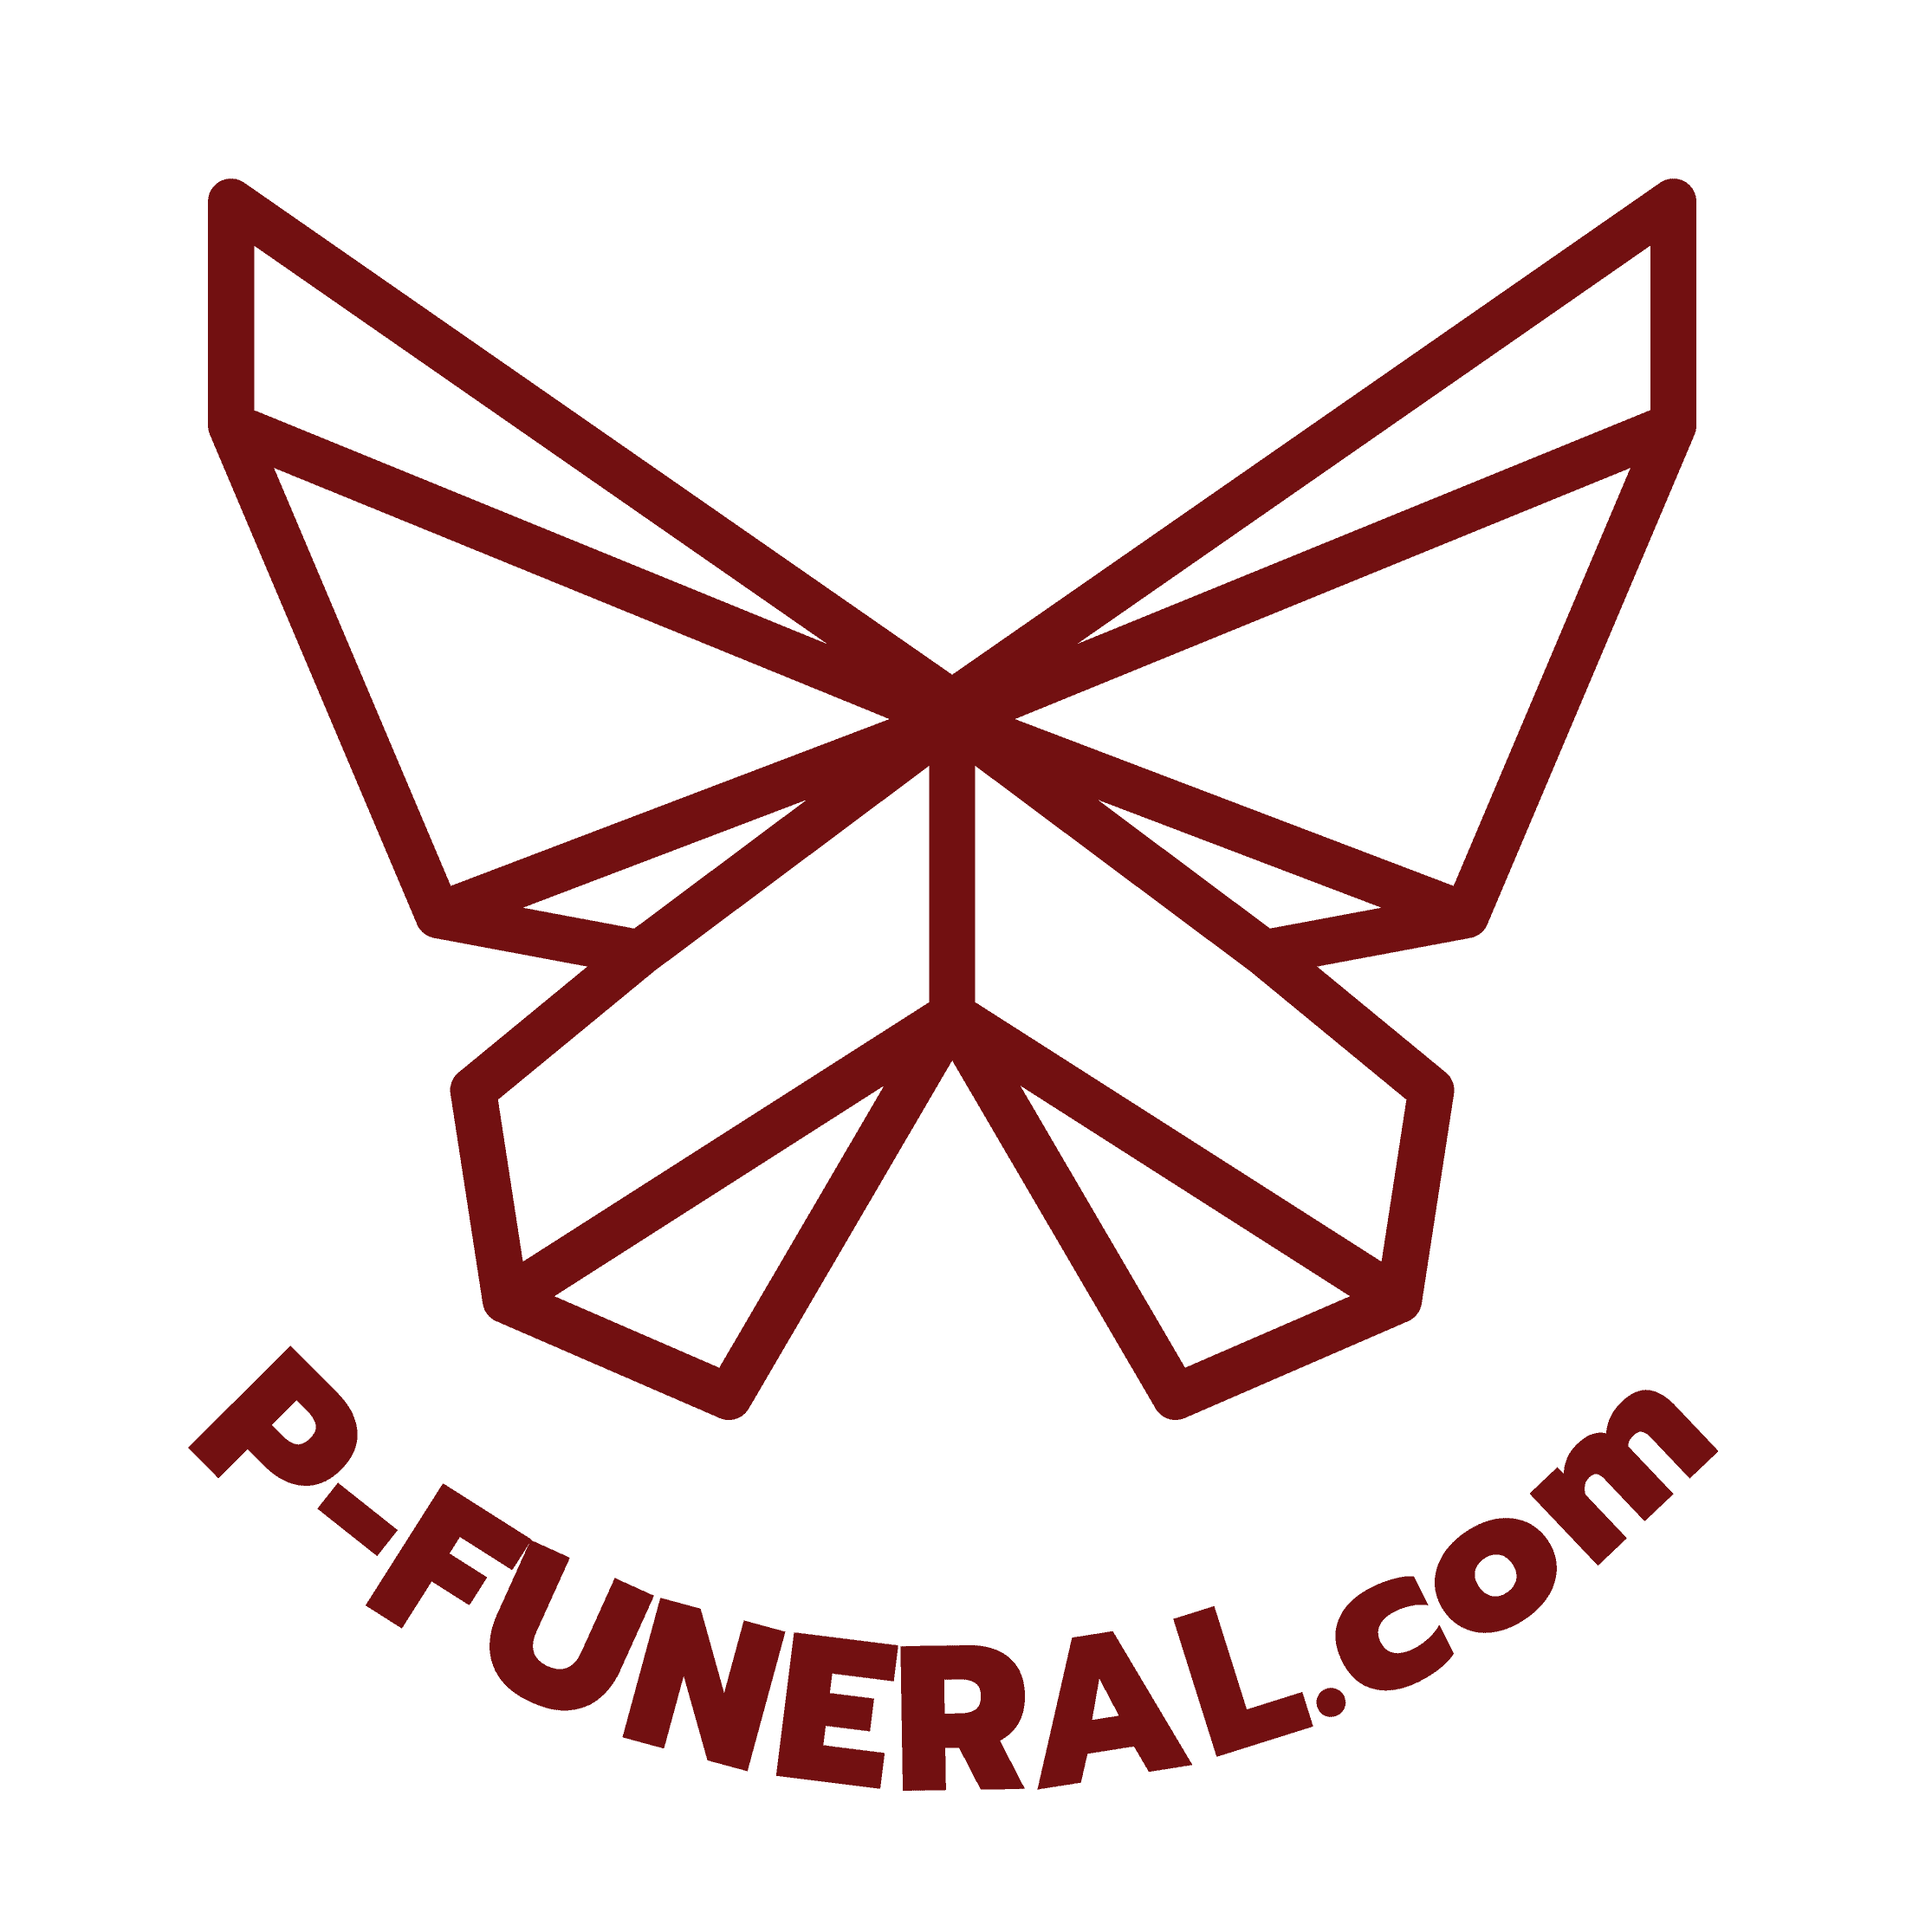 pfuneral บริการจัดงานศพครบวงจร จำหน่ายโลงศพ พวงหรีด และของชำร่วยในงานศพ